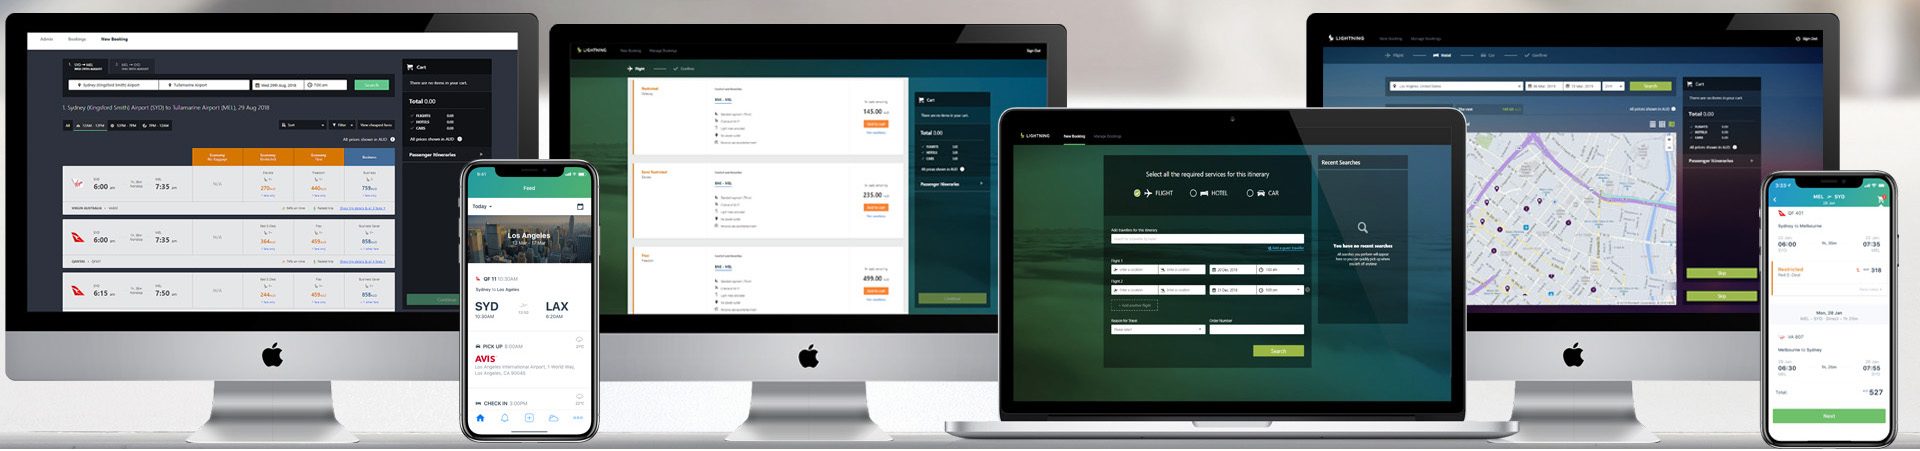 Lightning Online Booking Tool screens displayed on desktop, laptop and mobile phone